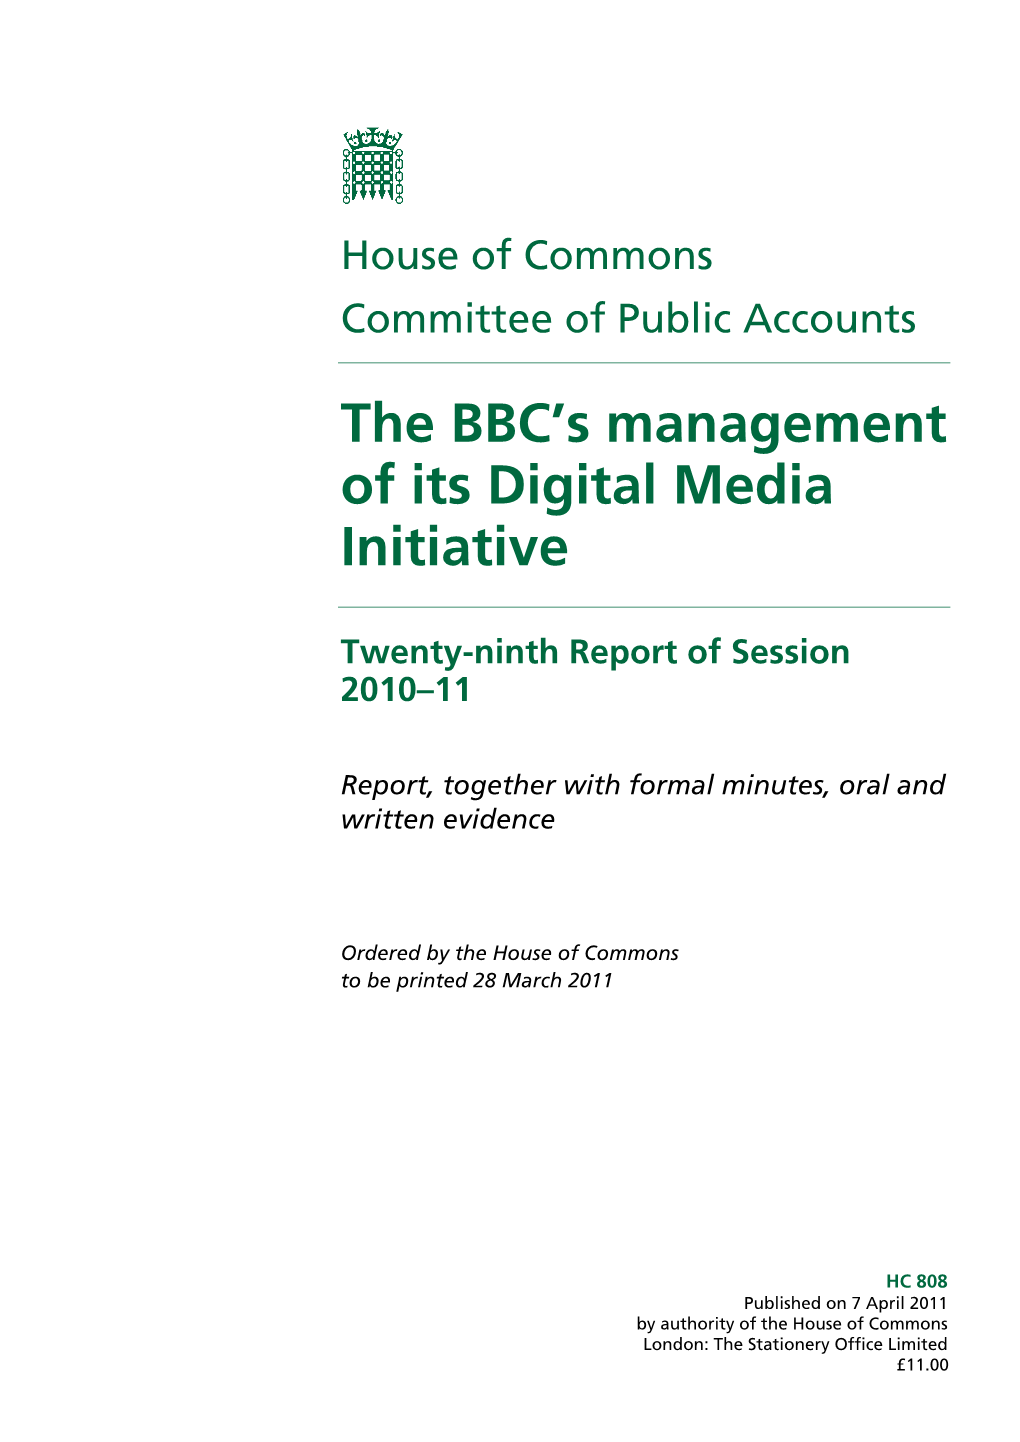 The BBC's Management of Its Digital Media Initiative